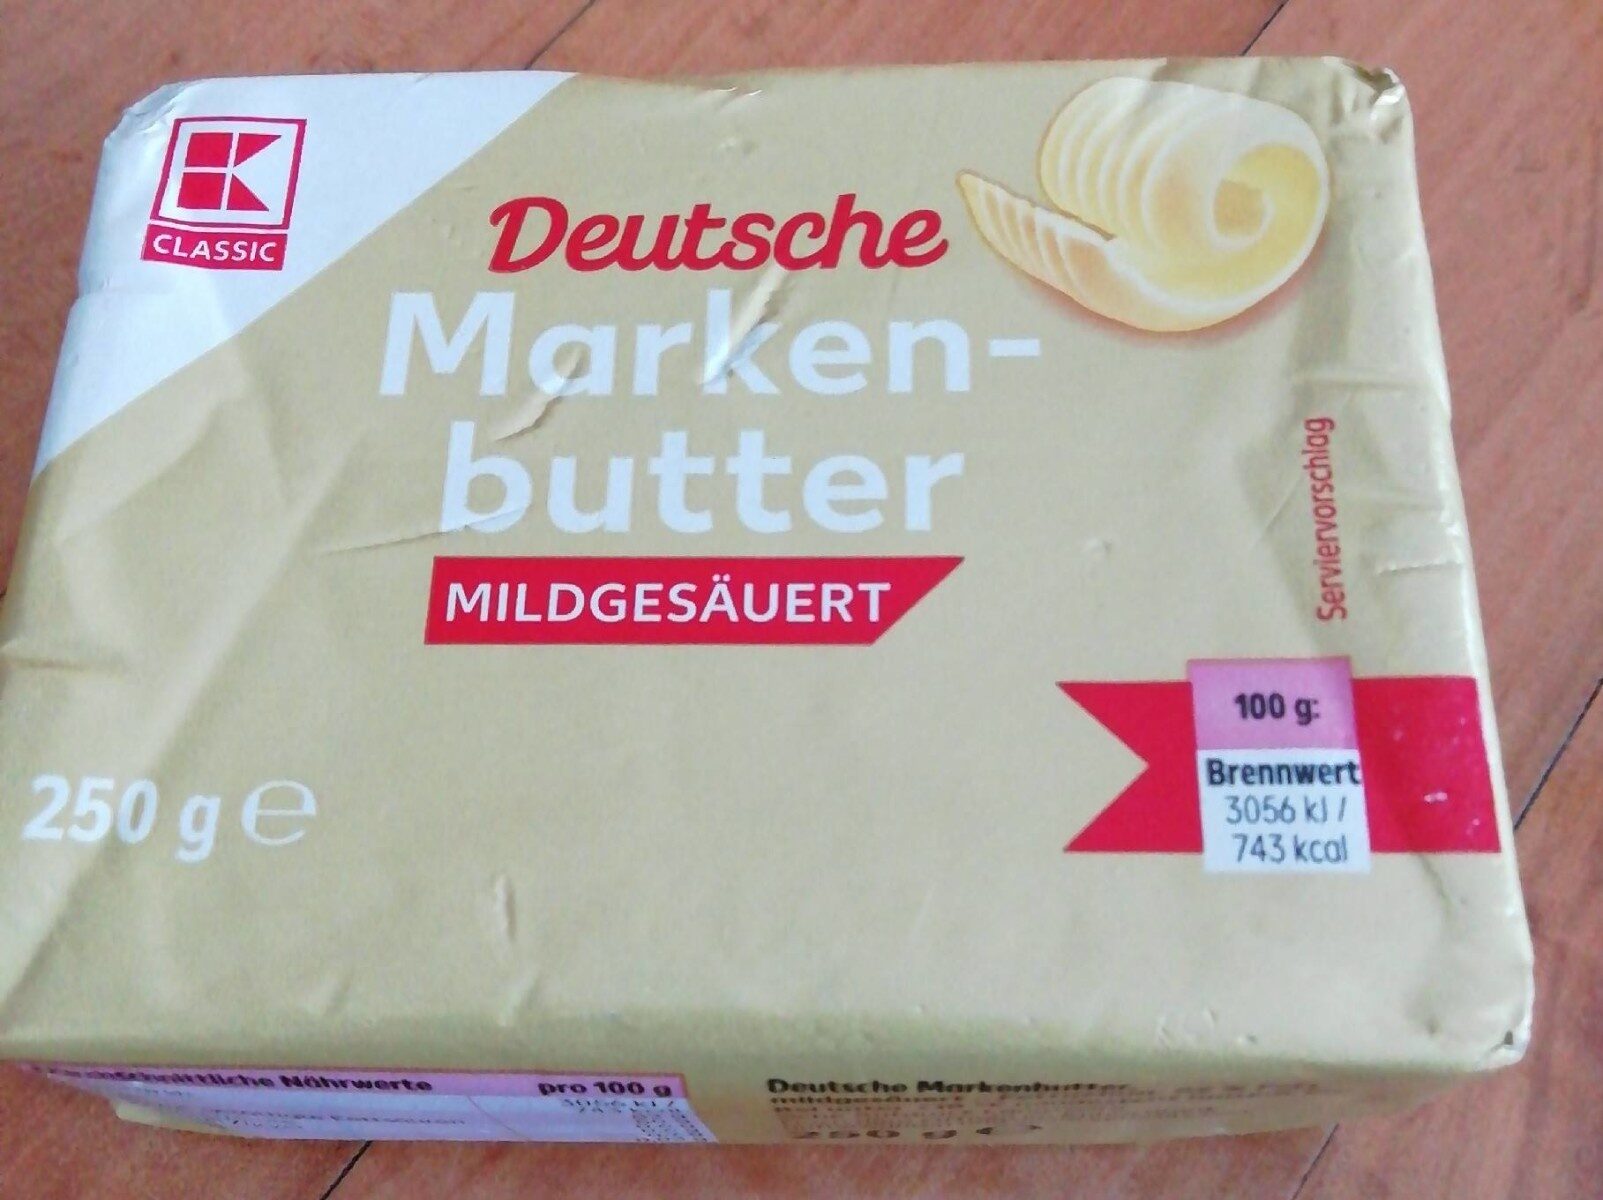 Deutsche Marken-butter - Product - en